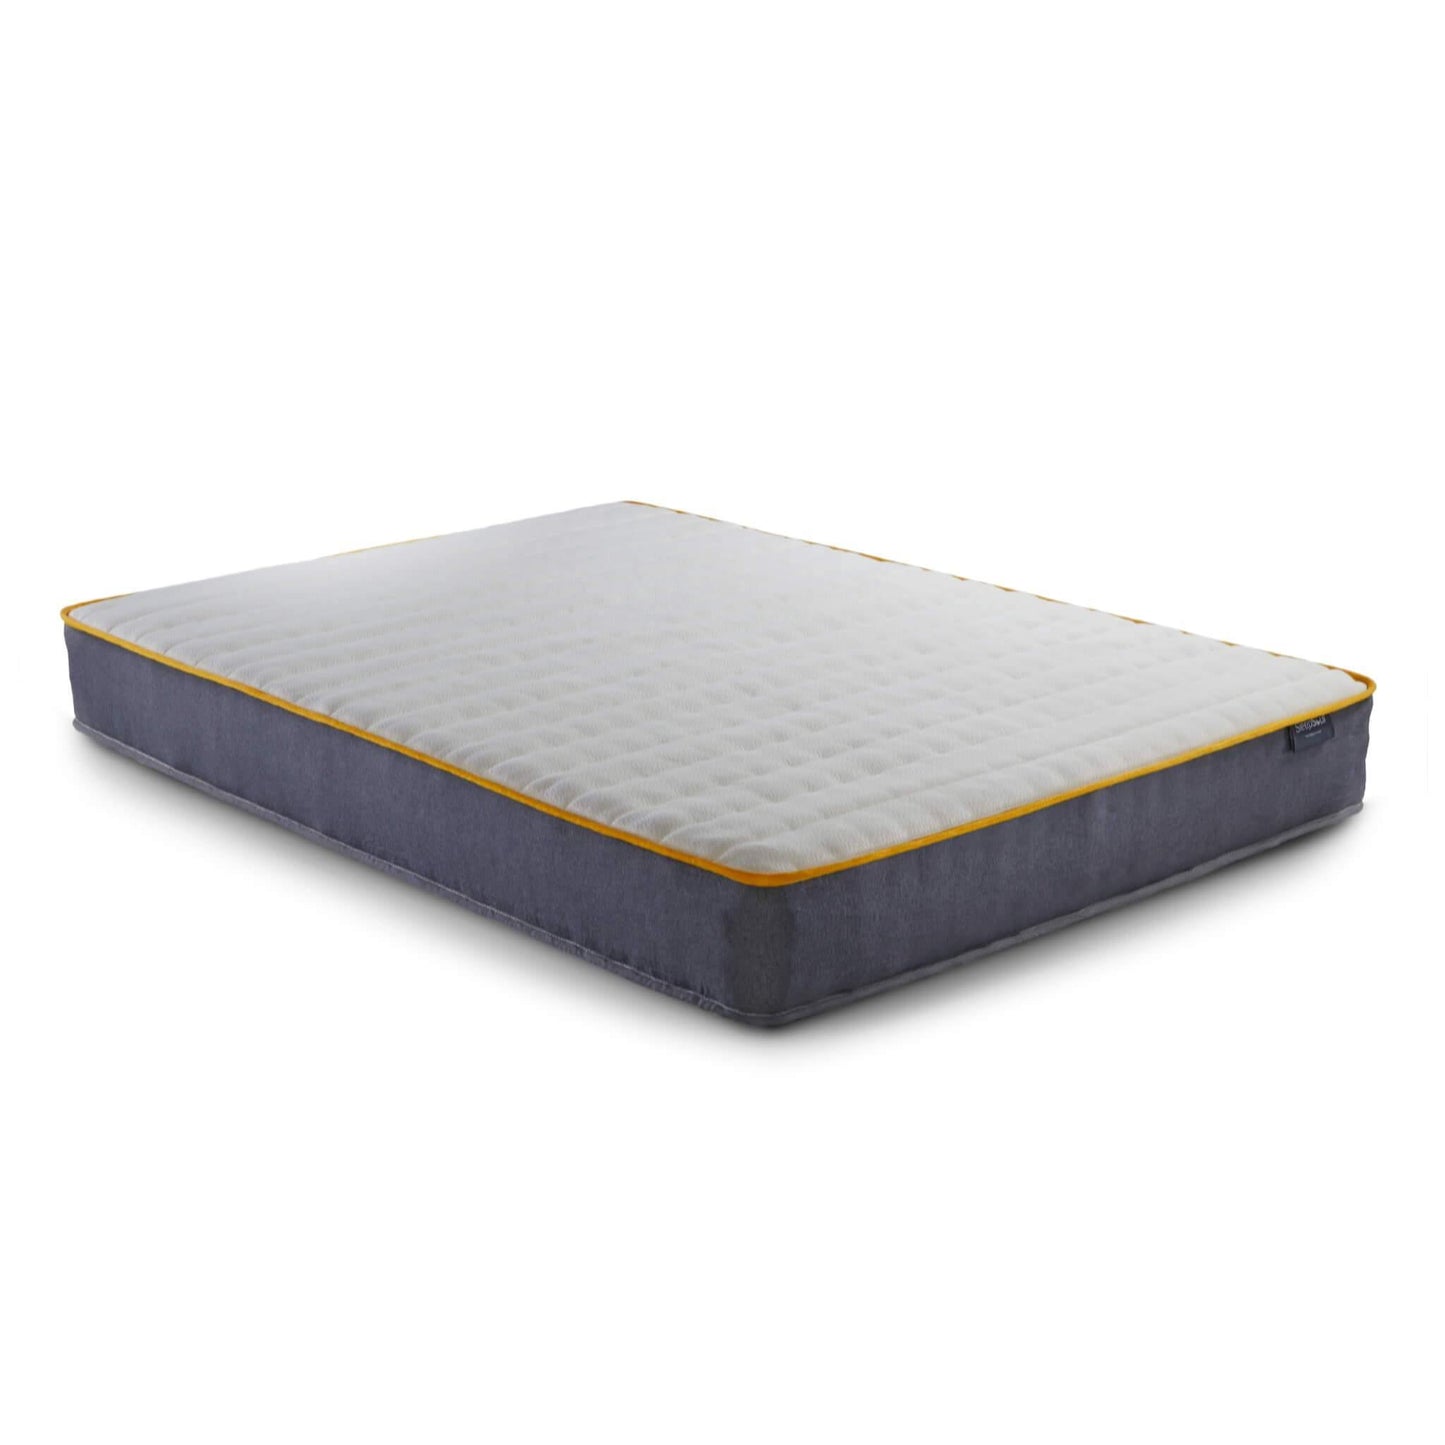 SleepSoul balance 800 pocket spring and memory foam small double mattress